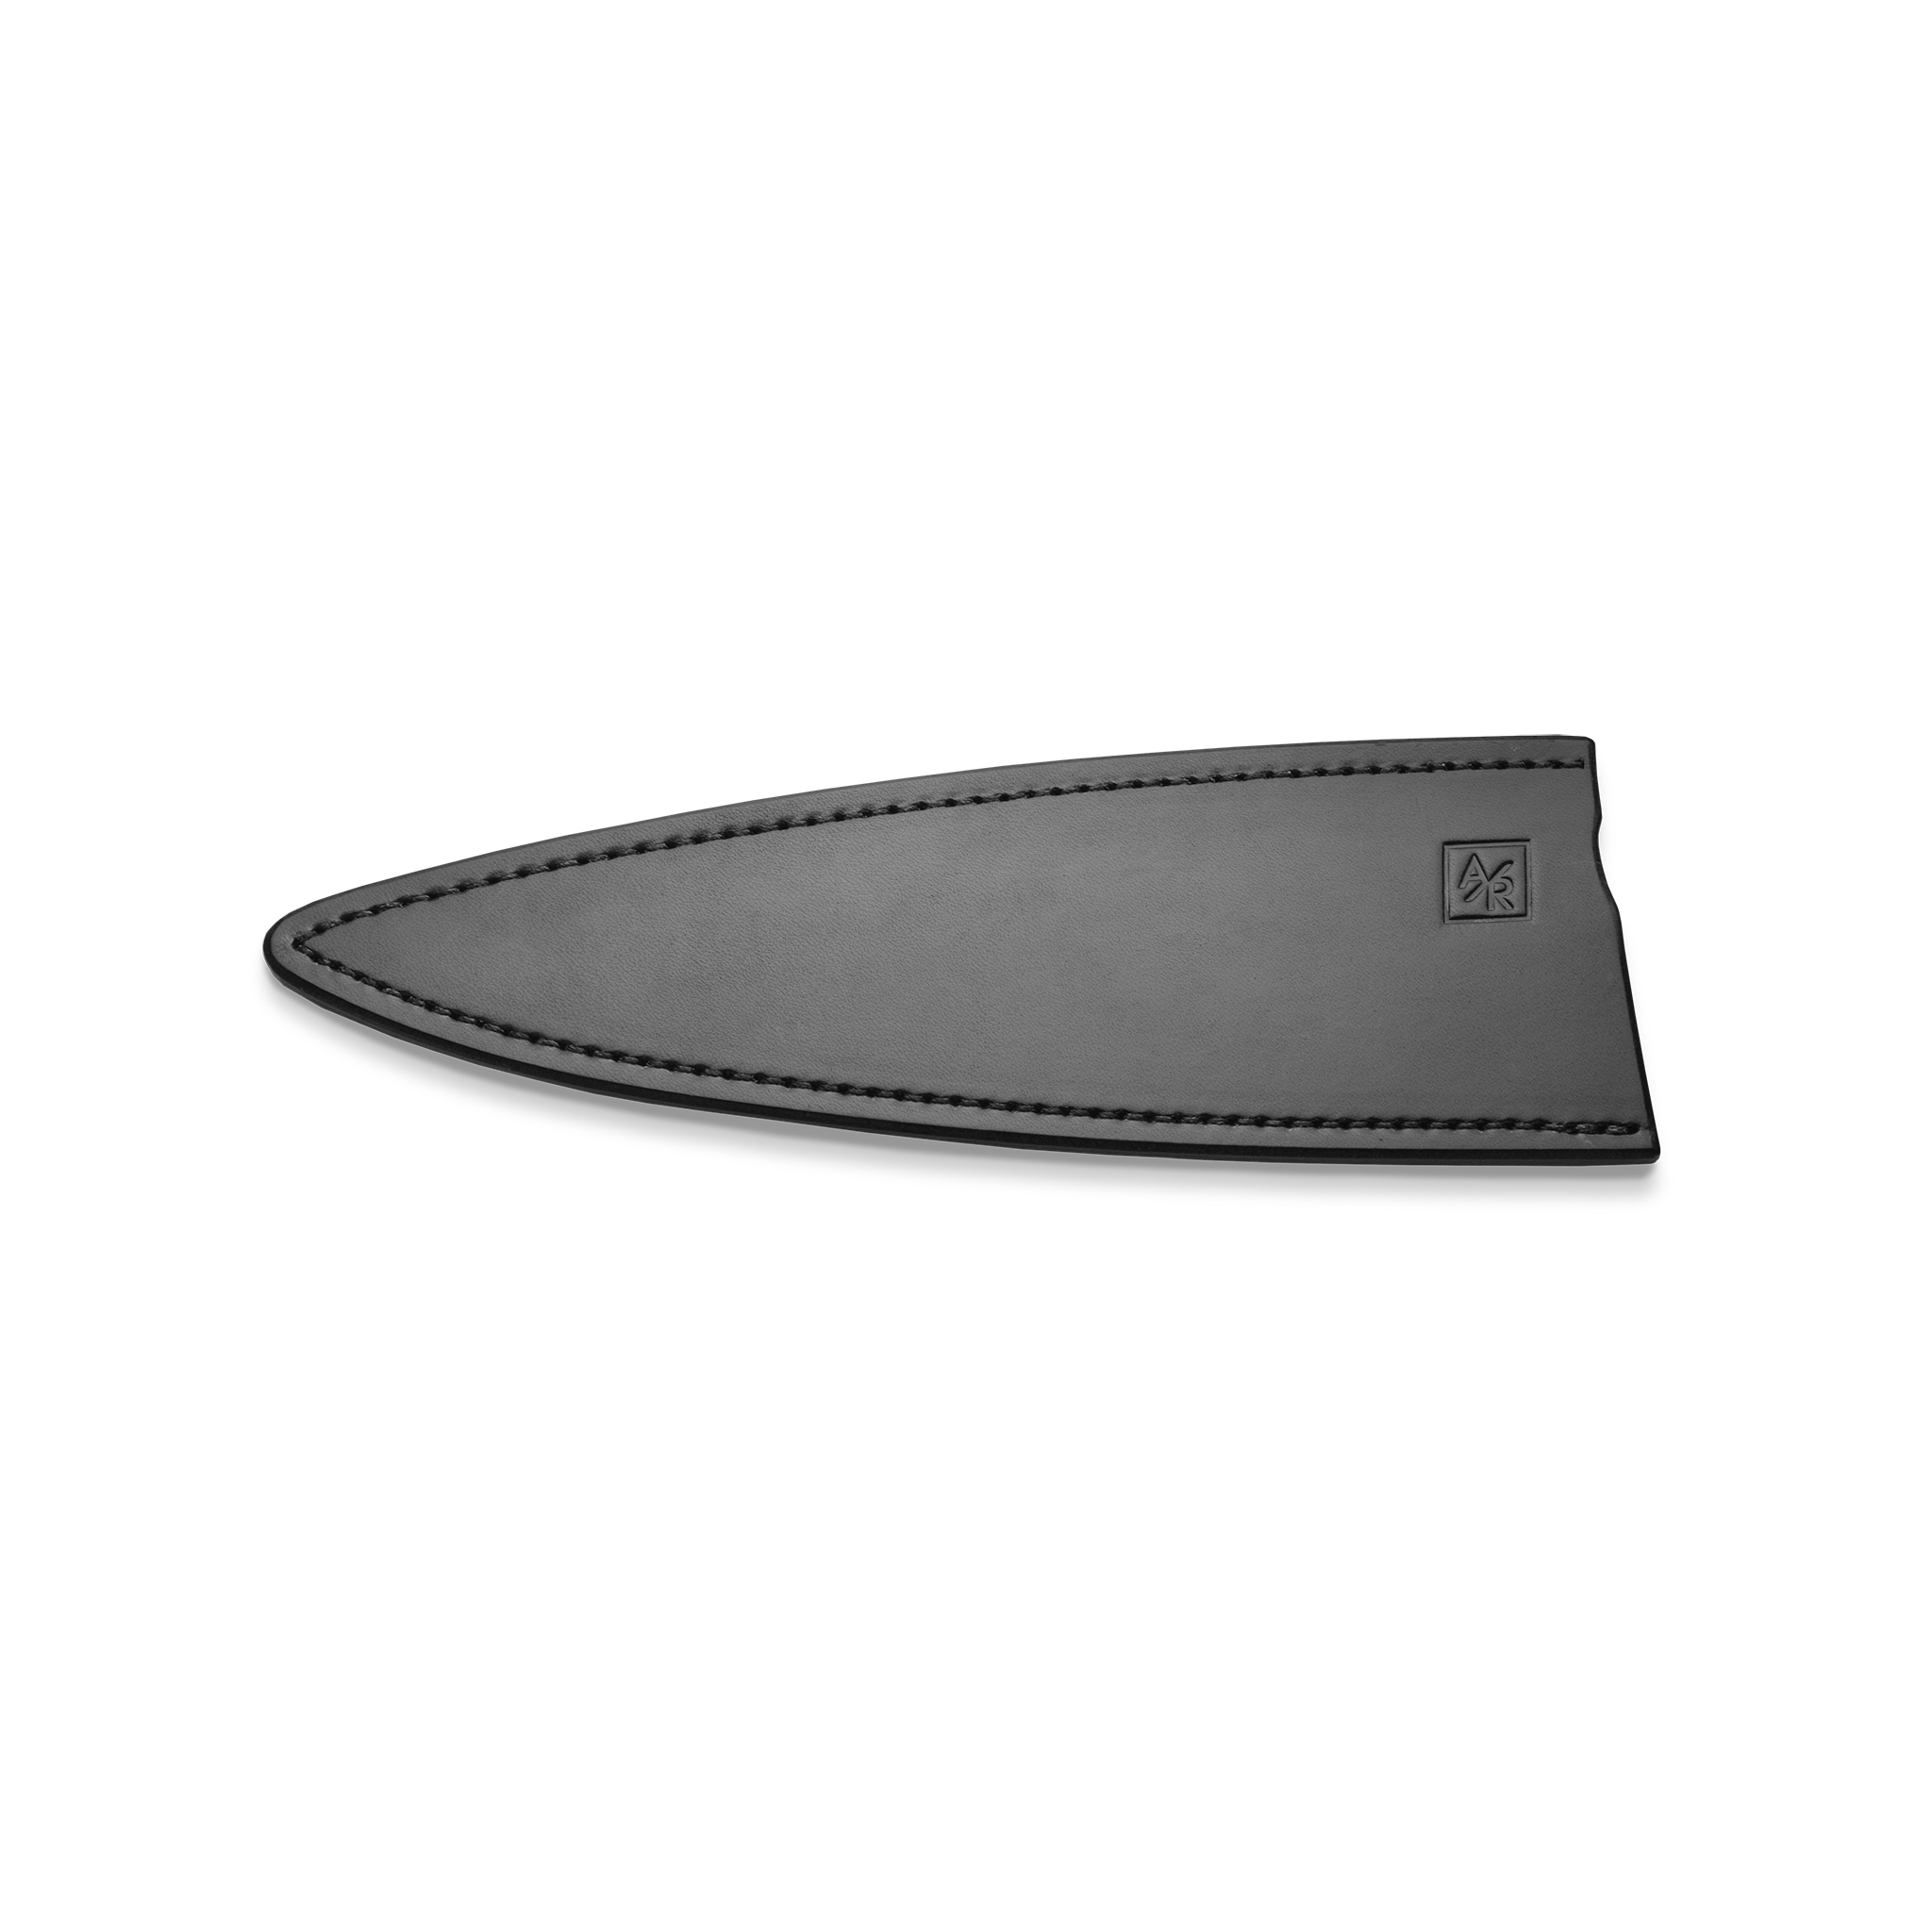 12 Inch Knife Blade Guards, 2 Piece Knife Sheath Set